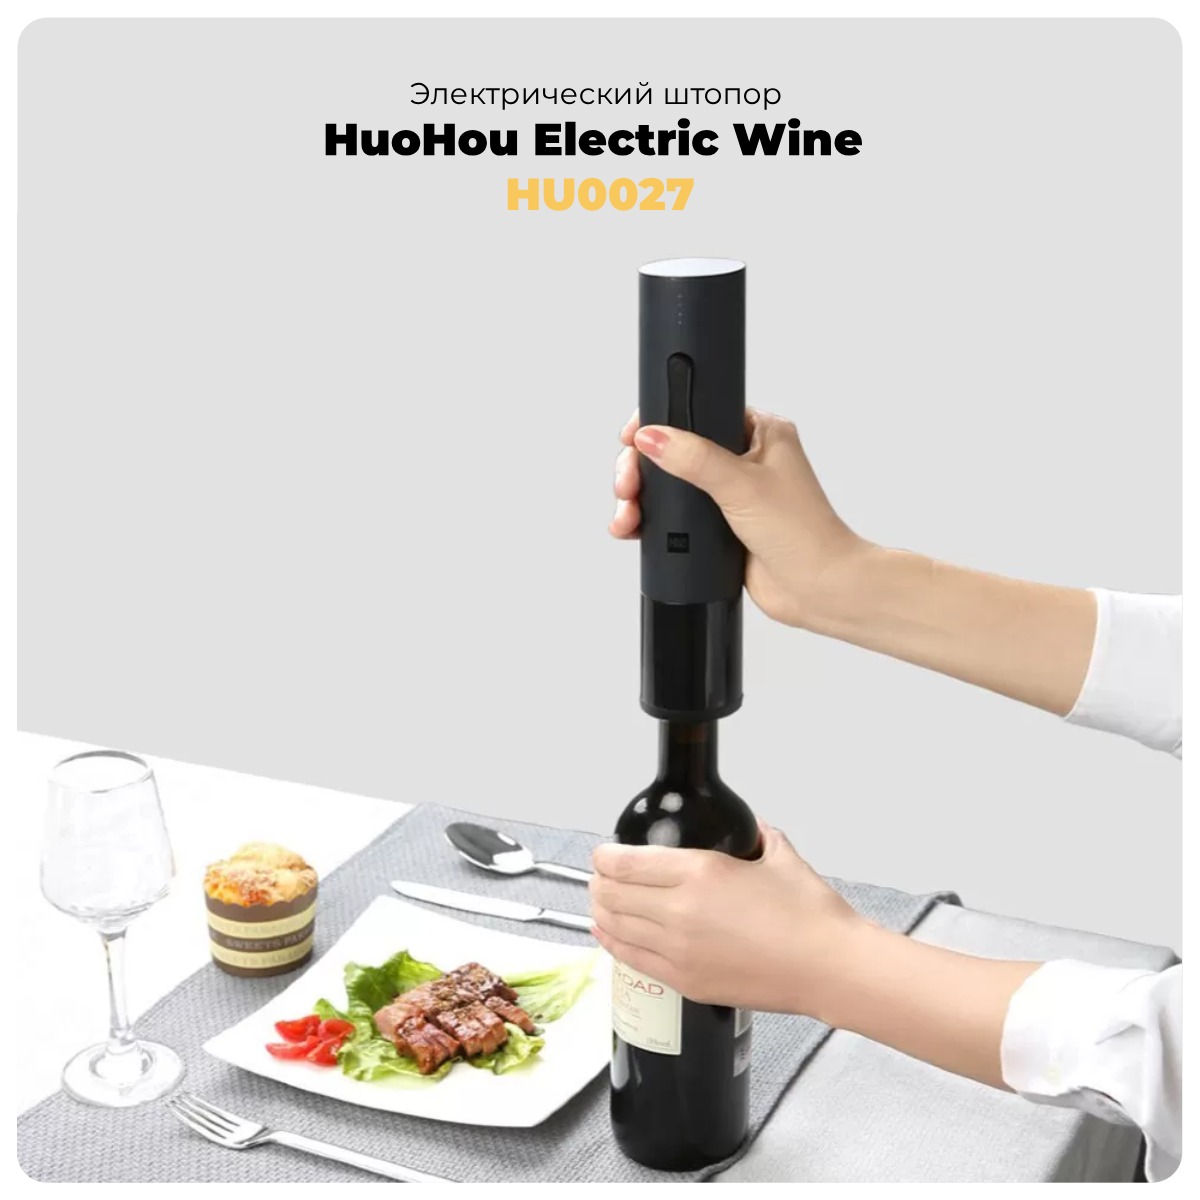 HuoHou-Electric-Wine-HU0027-01